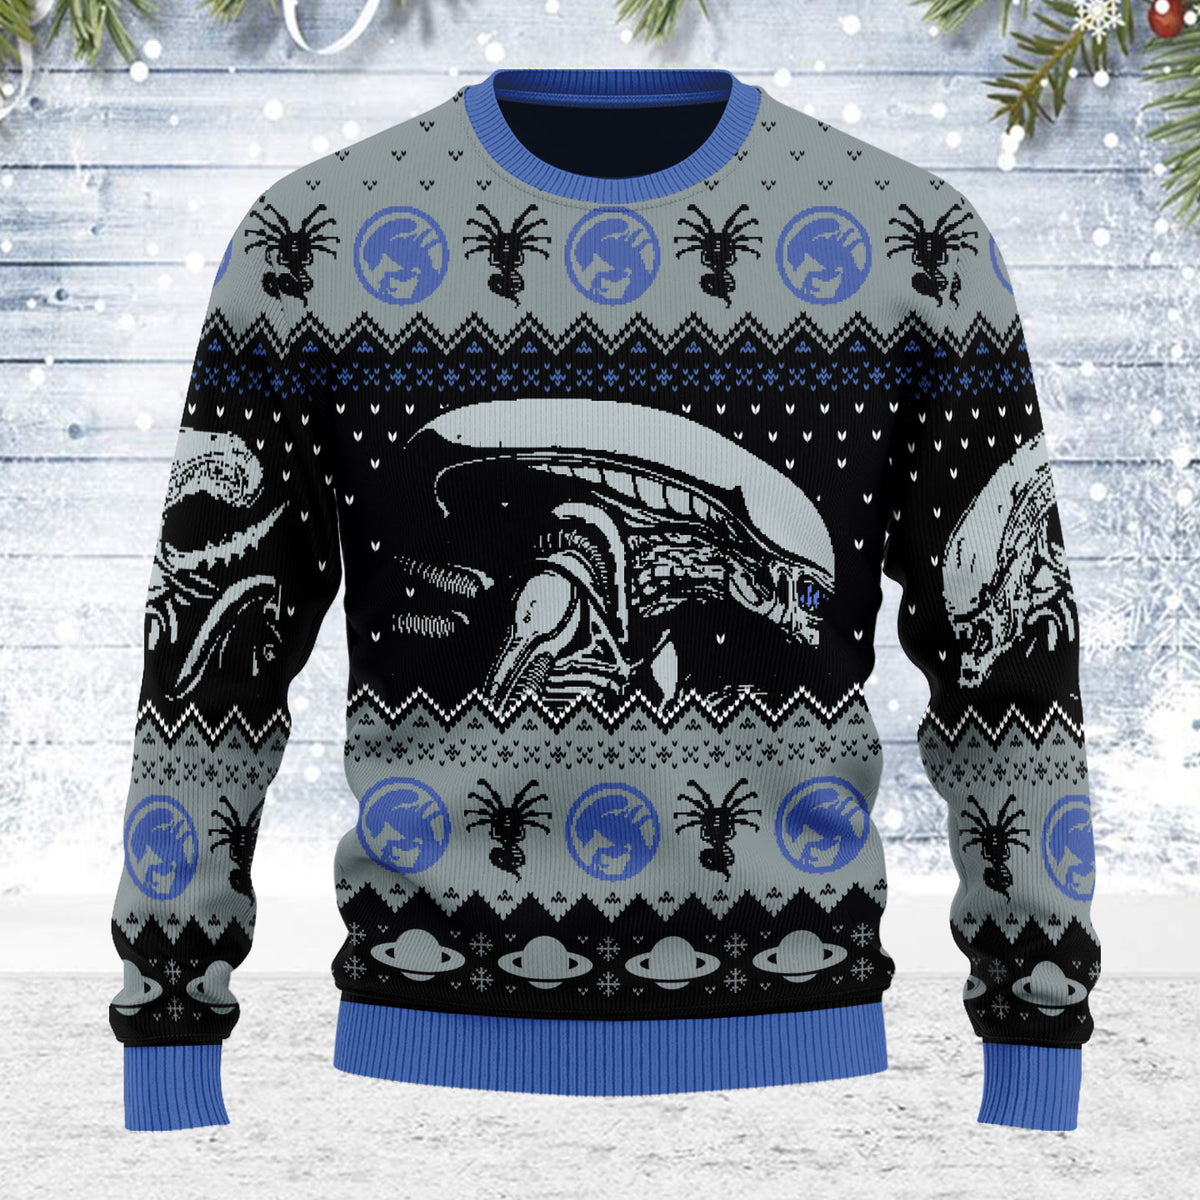 Customspig Ugly Christmas Sweater Alien Movie Xenomorph 3D Apparel ...